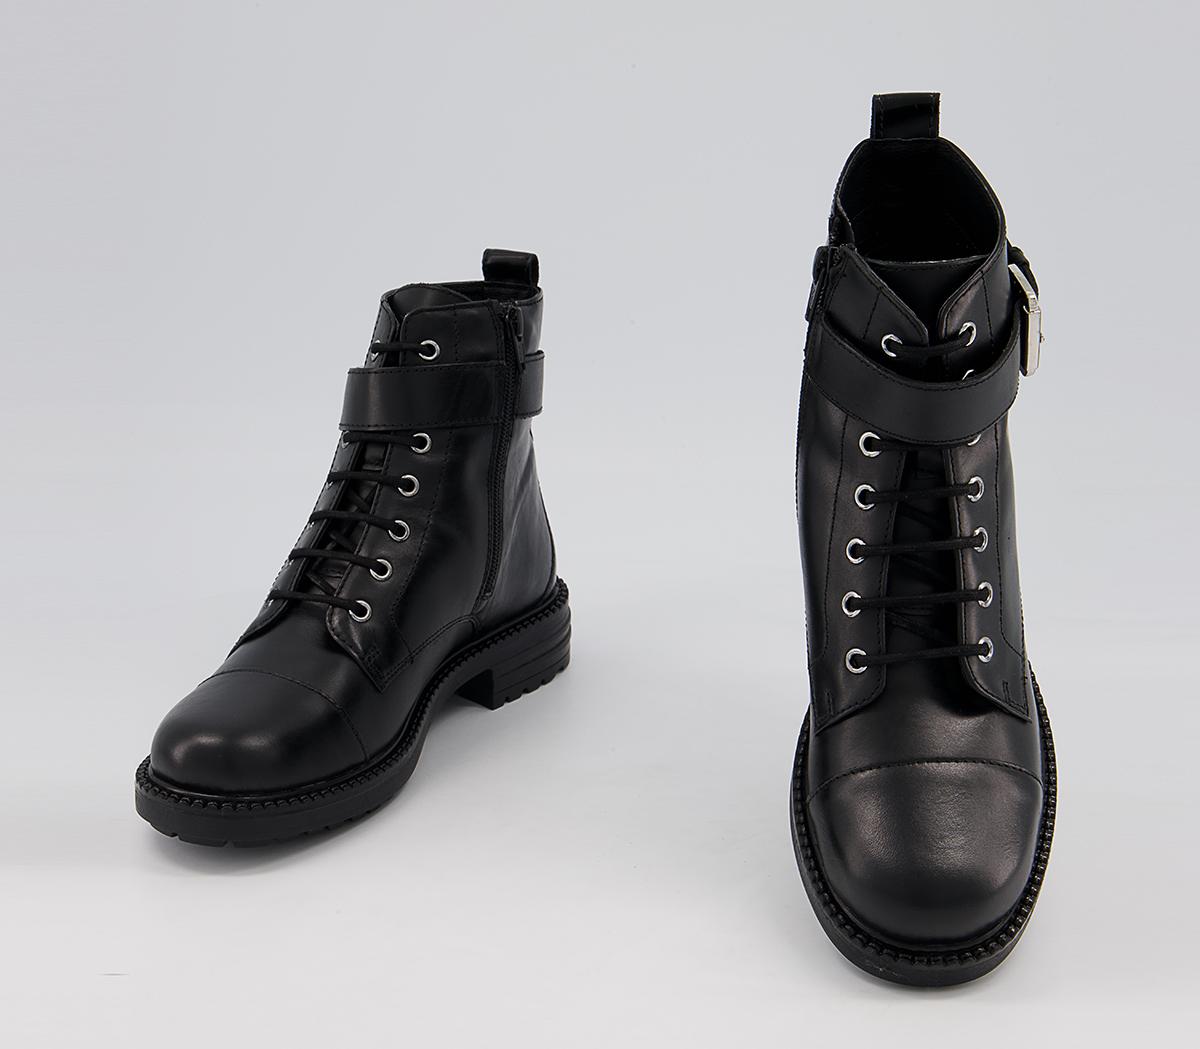 OFFICE Alpaca Buckle Lace Up Biker Boots Black Leather - Women's Ankle ...